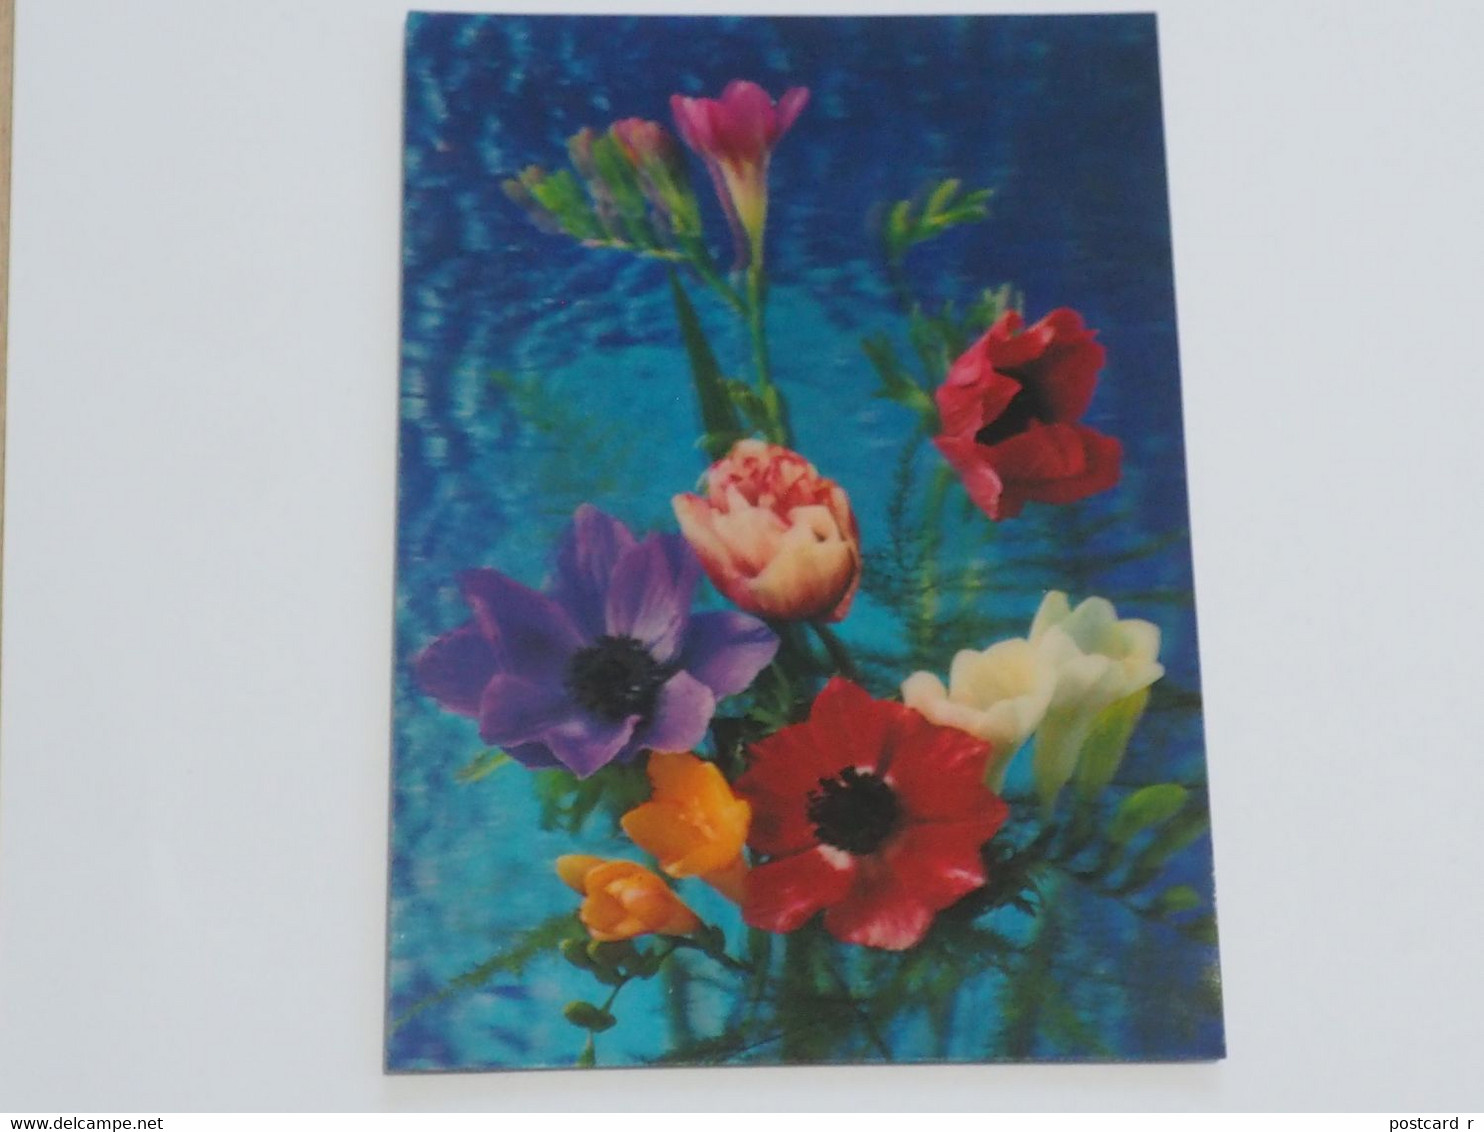 3d 3 D Lenticular Stereo Postcard Flowers 1979  A 215 - Estereoscópicas